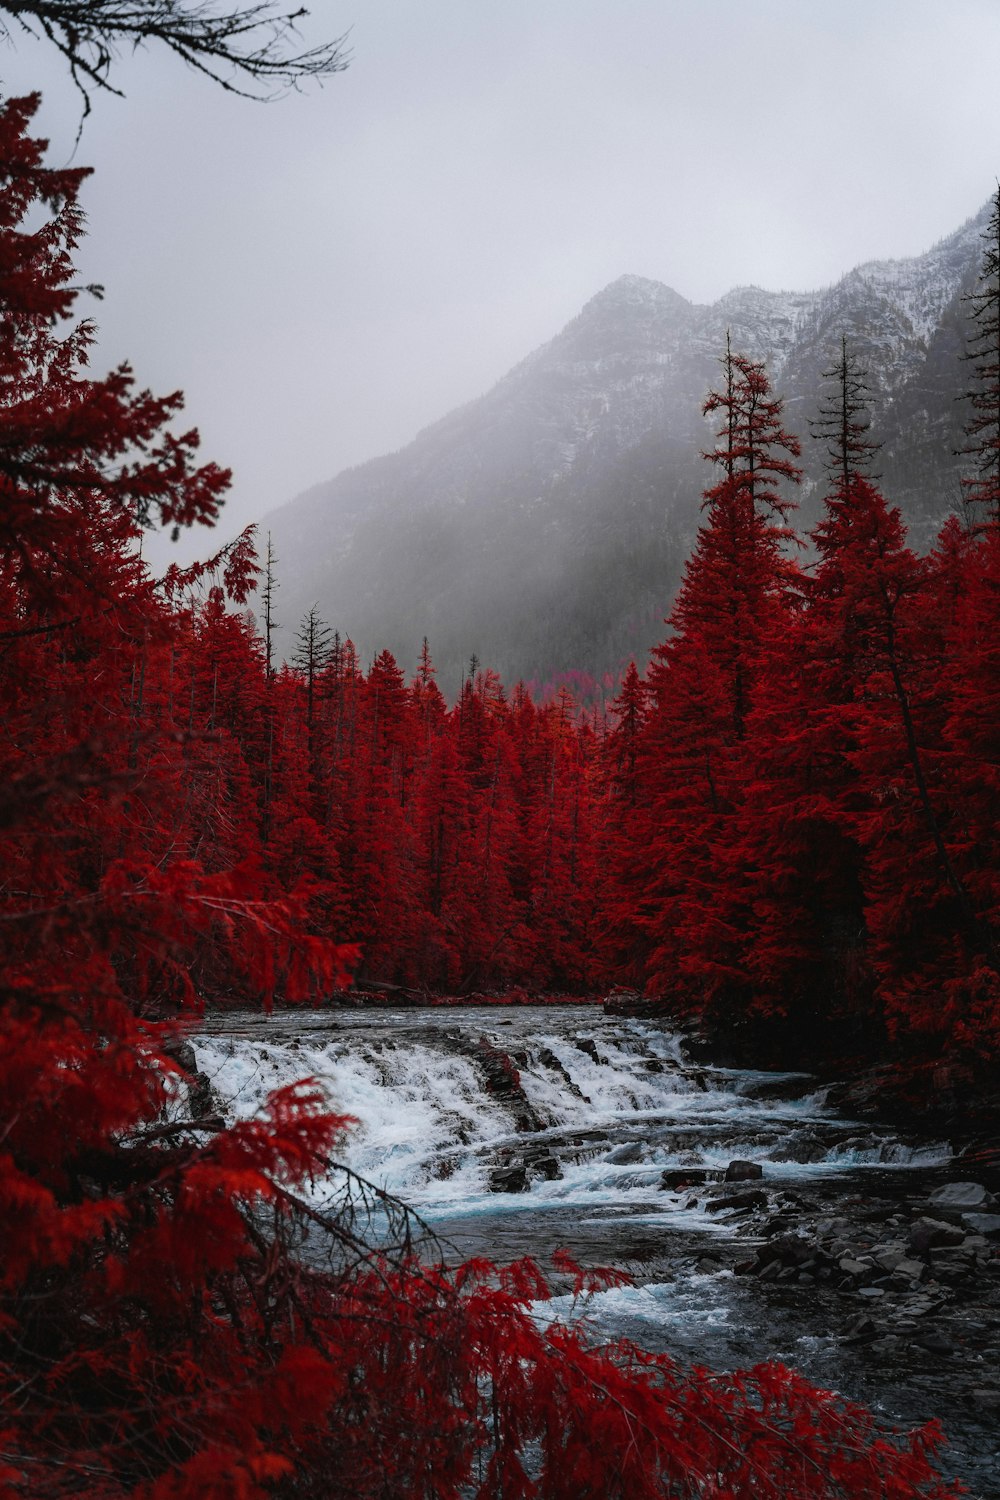 Cascadas de río cerca de árboles rojos